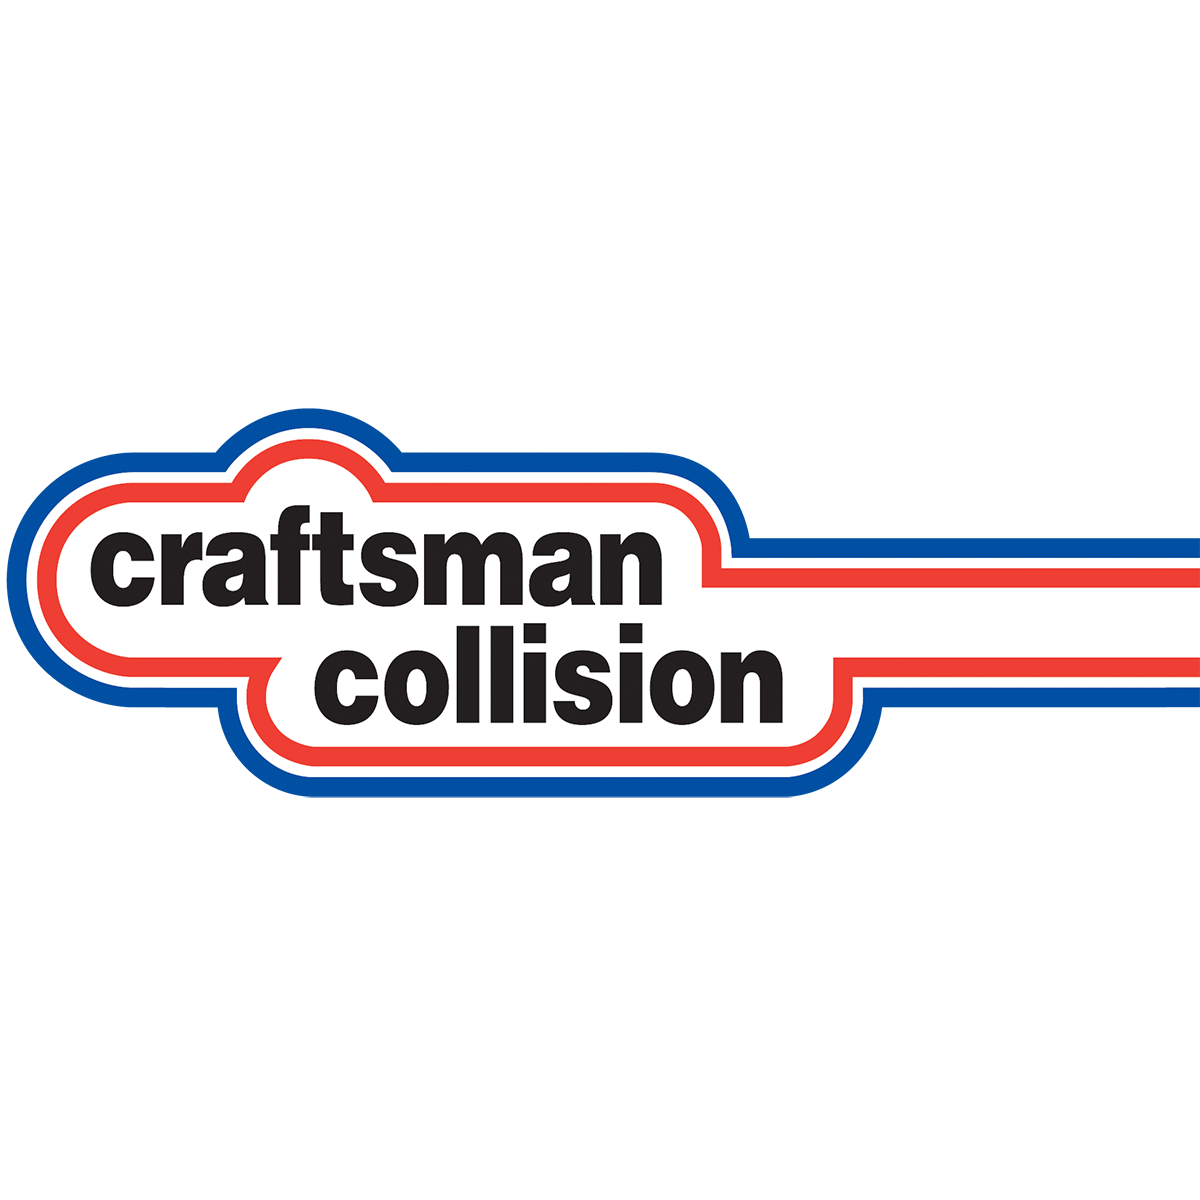 Craftsman Collision - North Vancouver West